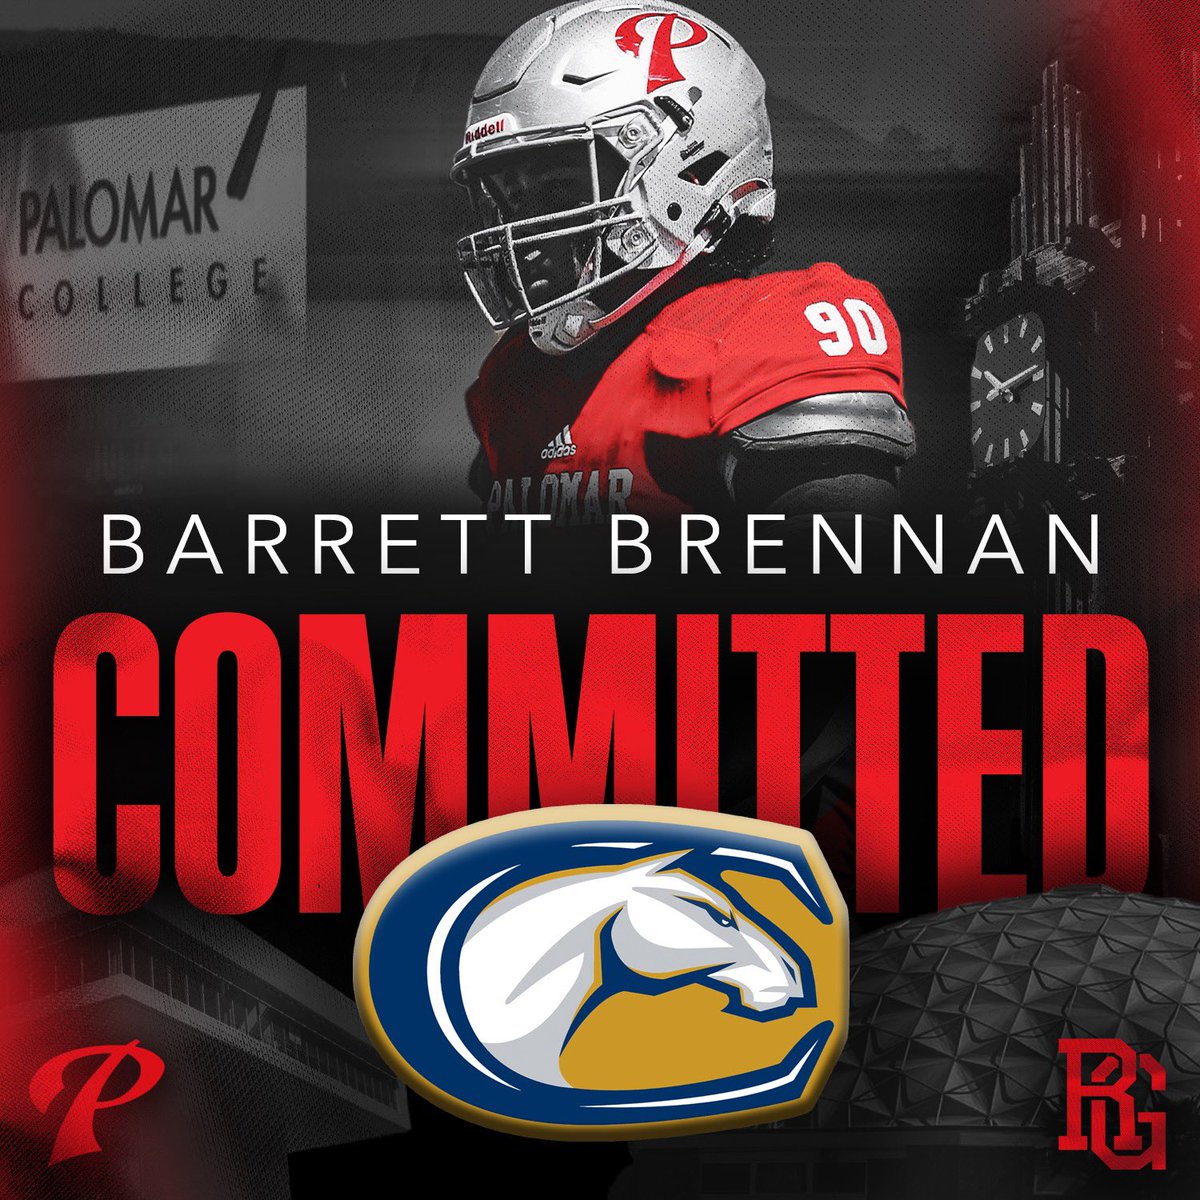 Congratulations to Barrett Brennan on his commitment to UC Davis University!